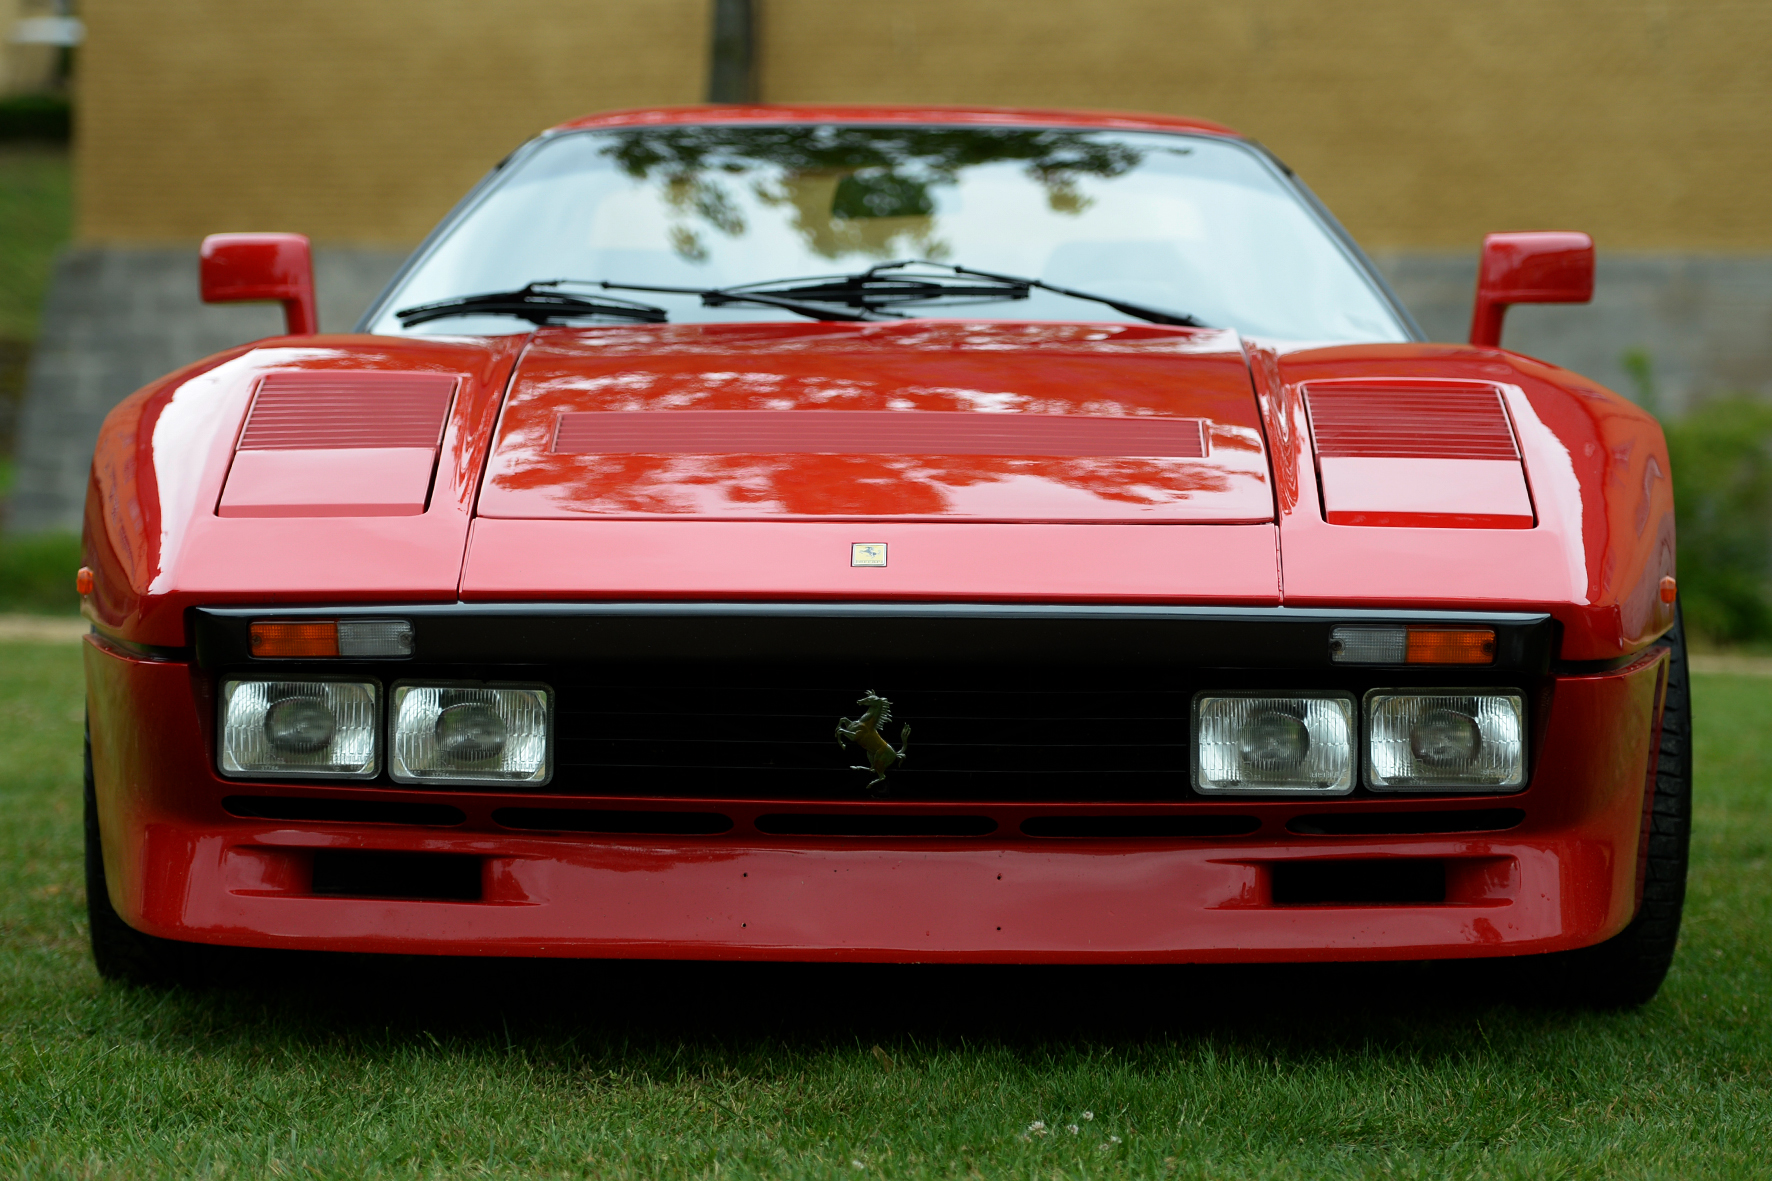 A Lifetime Opportunity: Driving A Ferrari 288 GTO